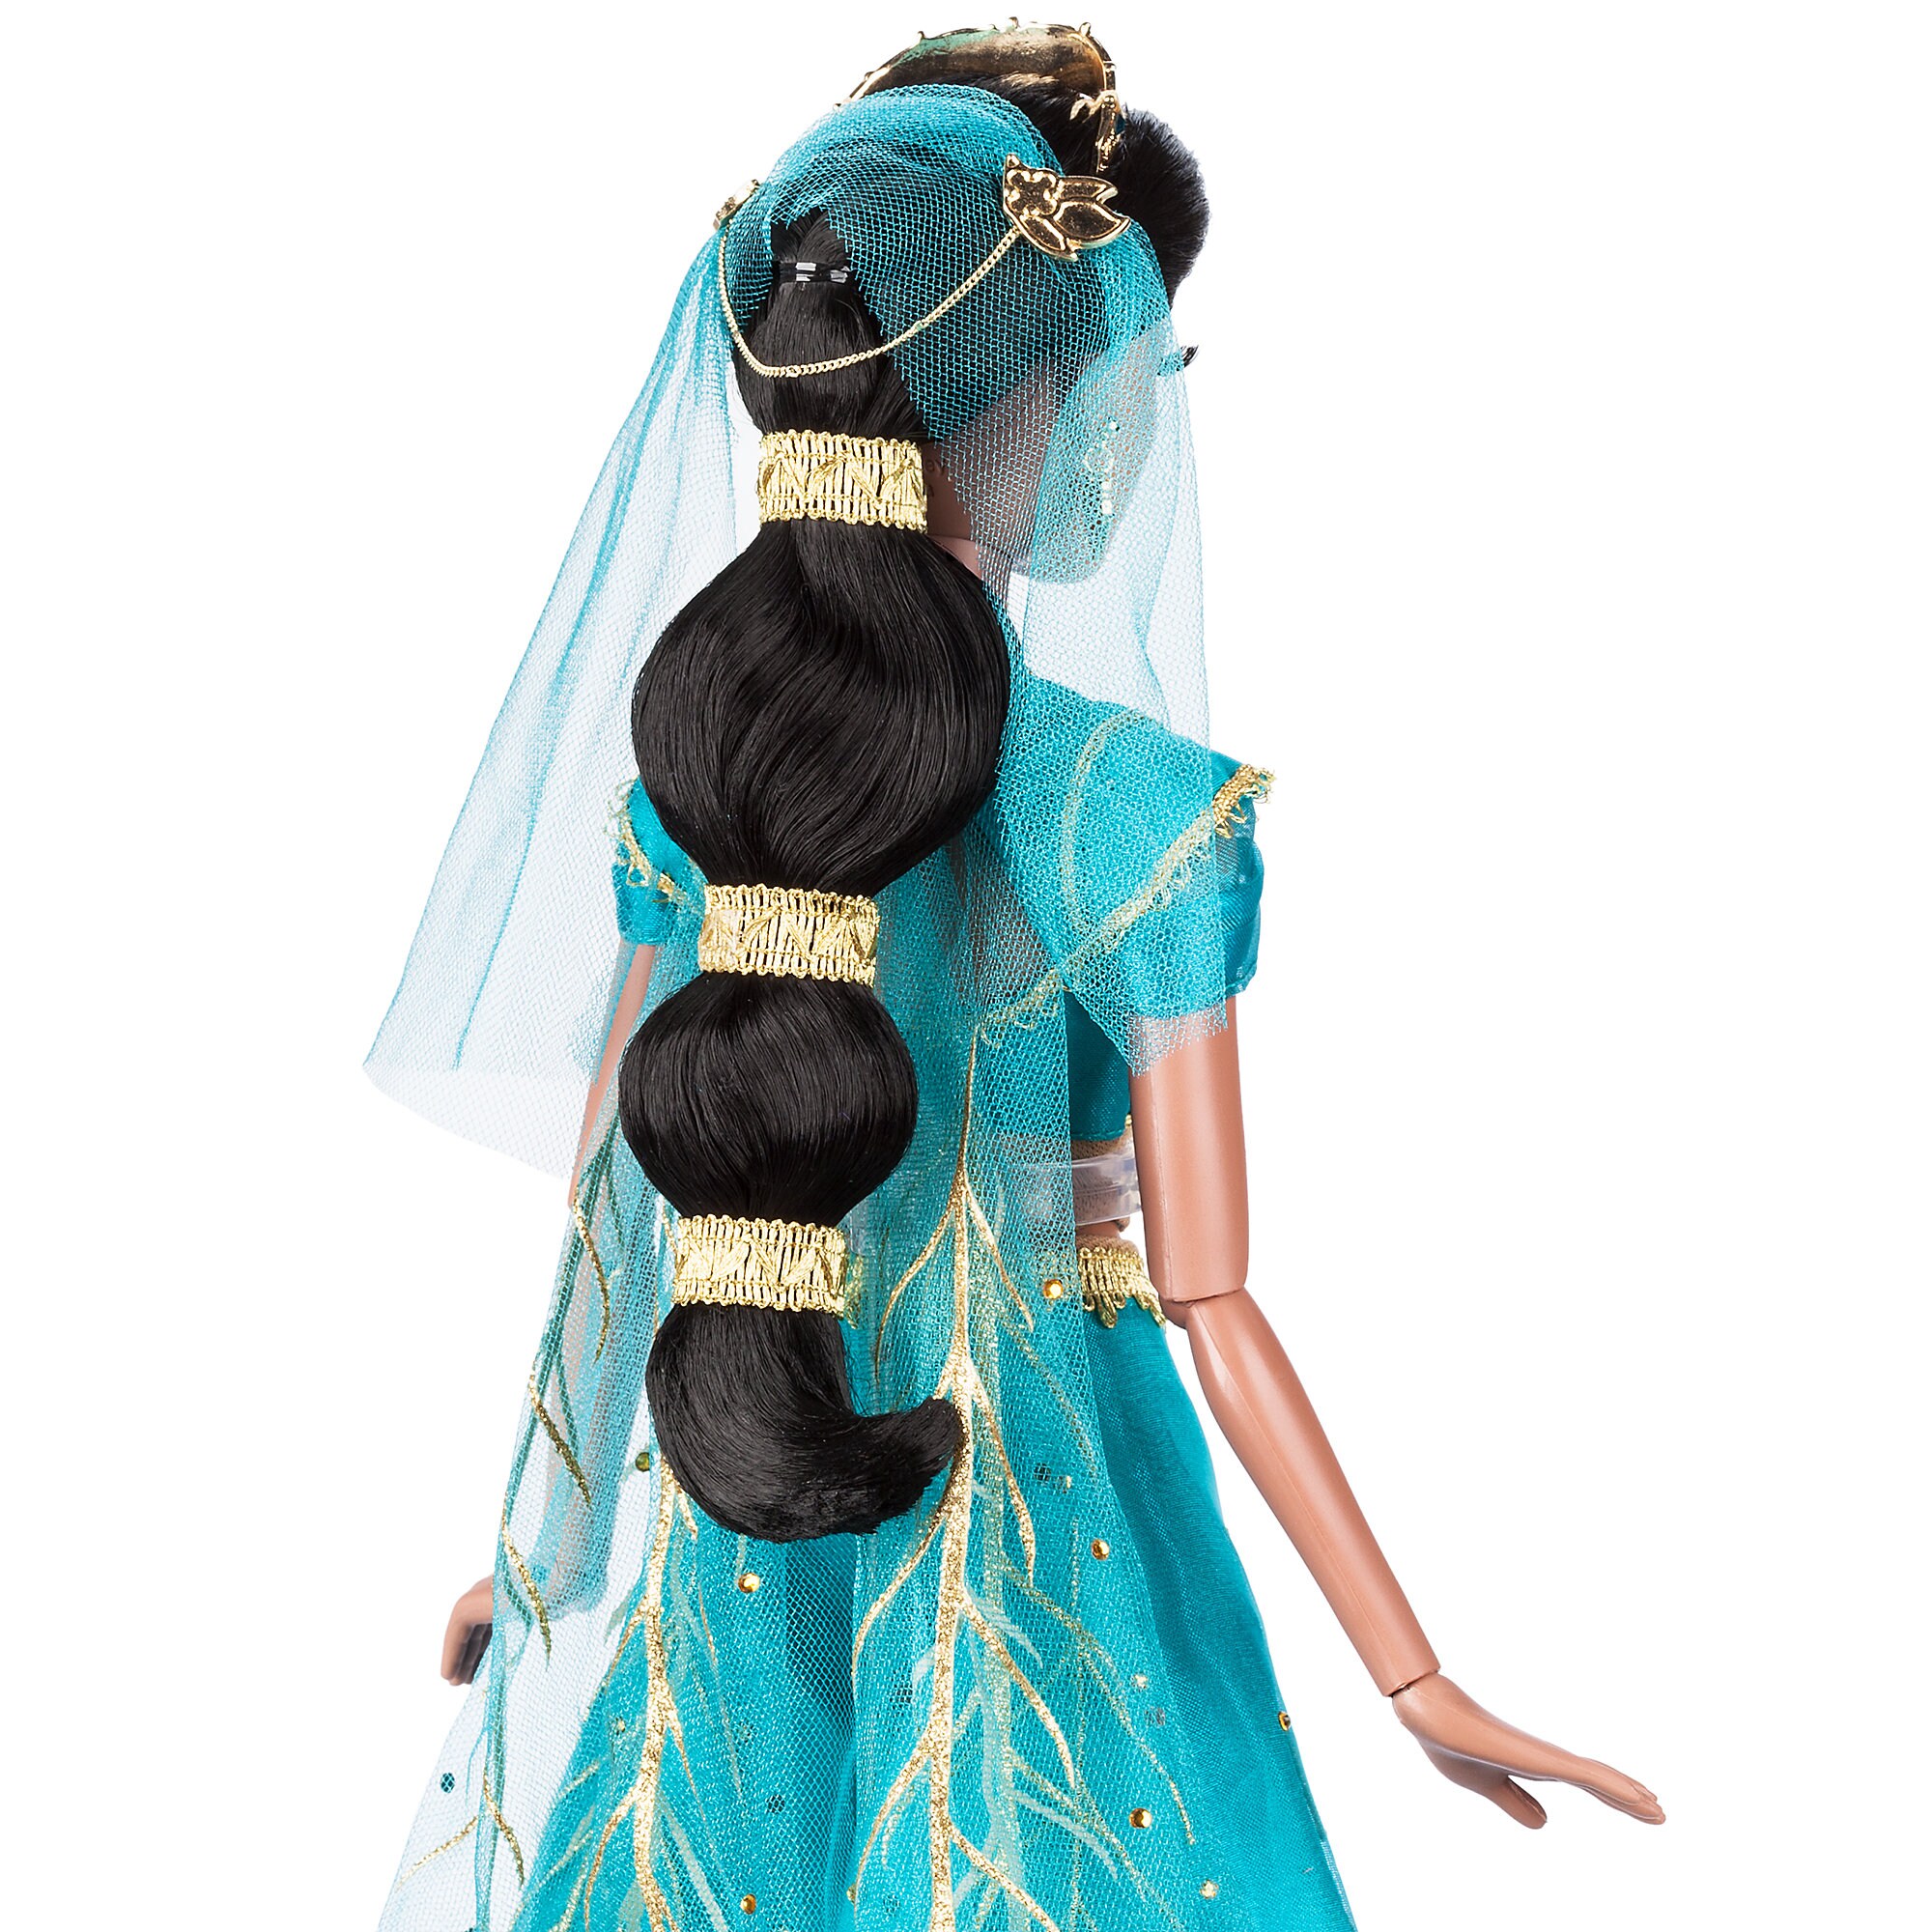 aladdin limited edition doll